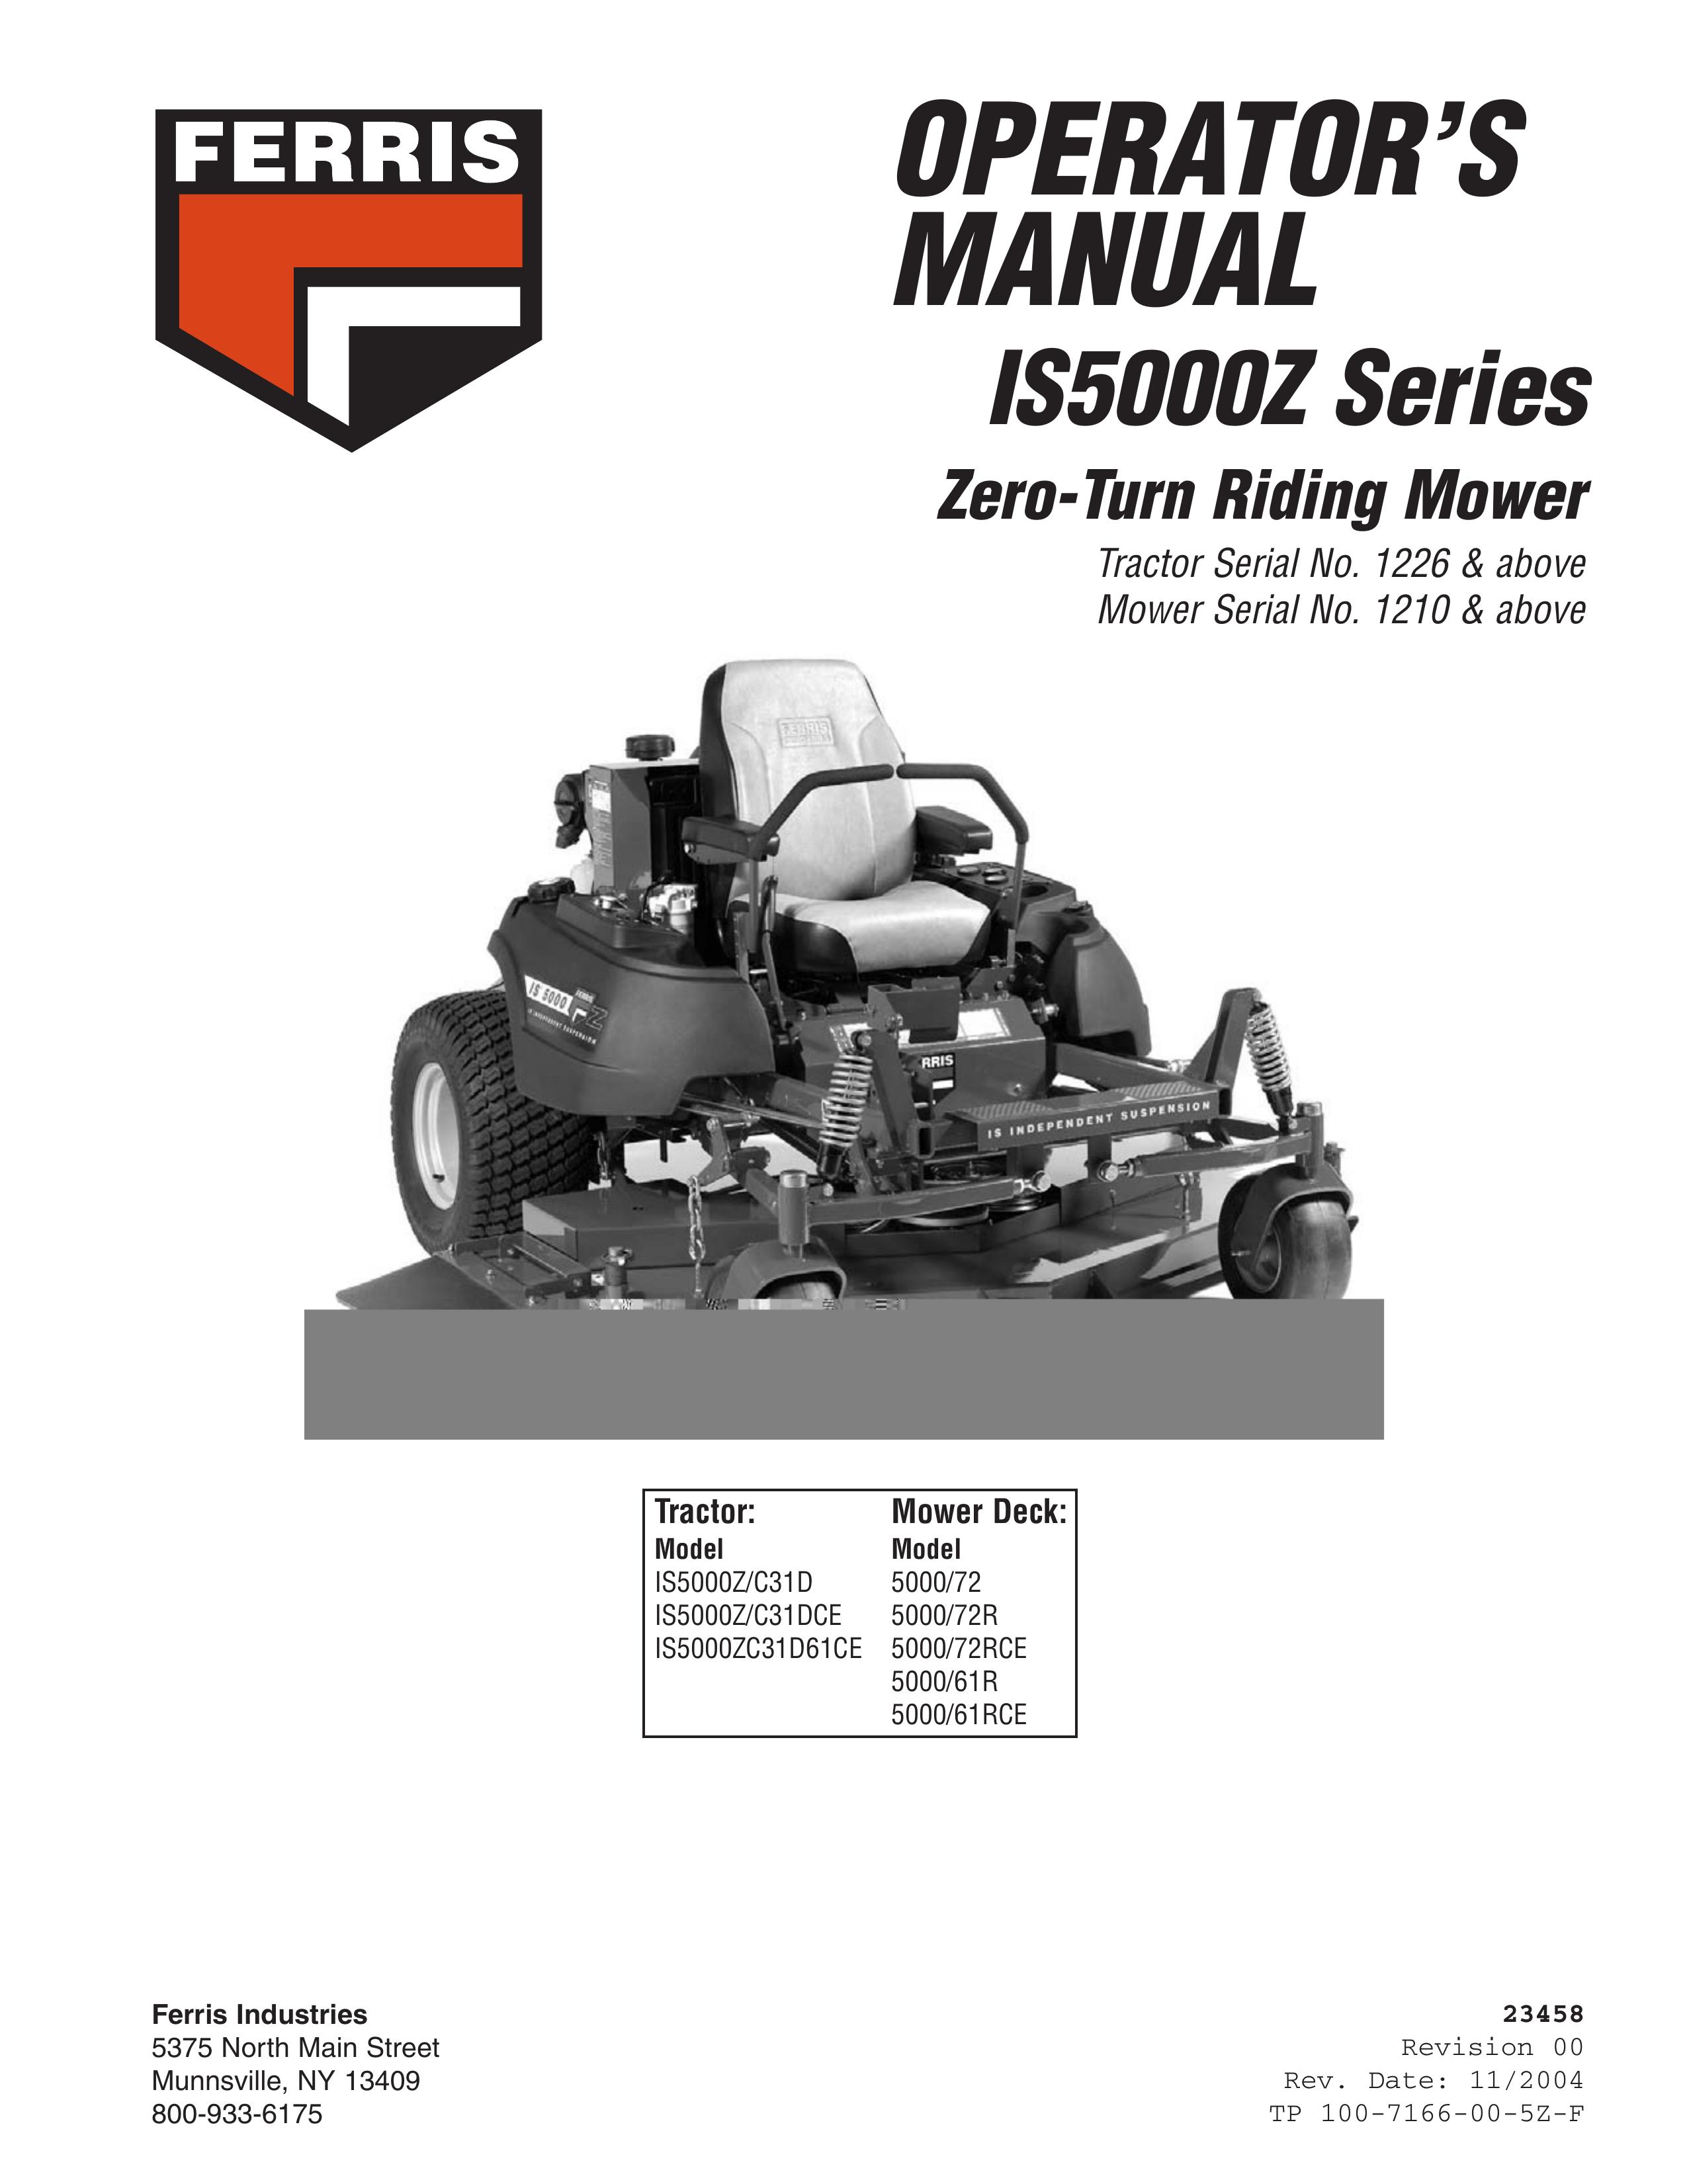 Ferris Industries 5000/72RCE Lawn Mower User Manual